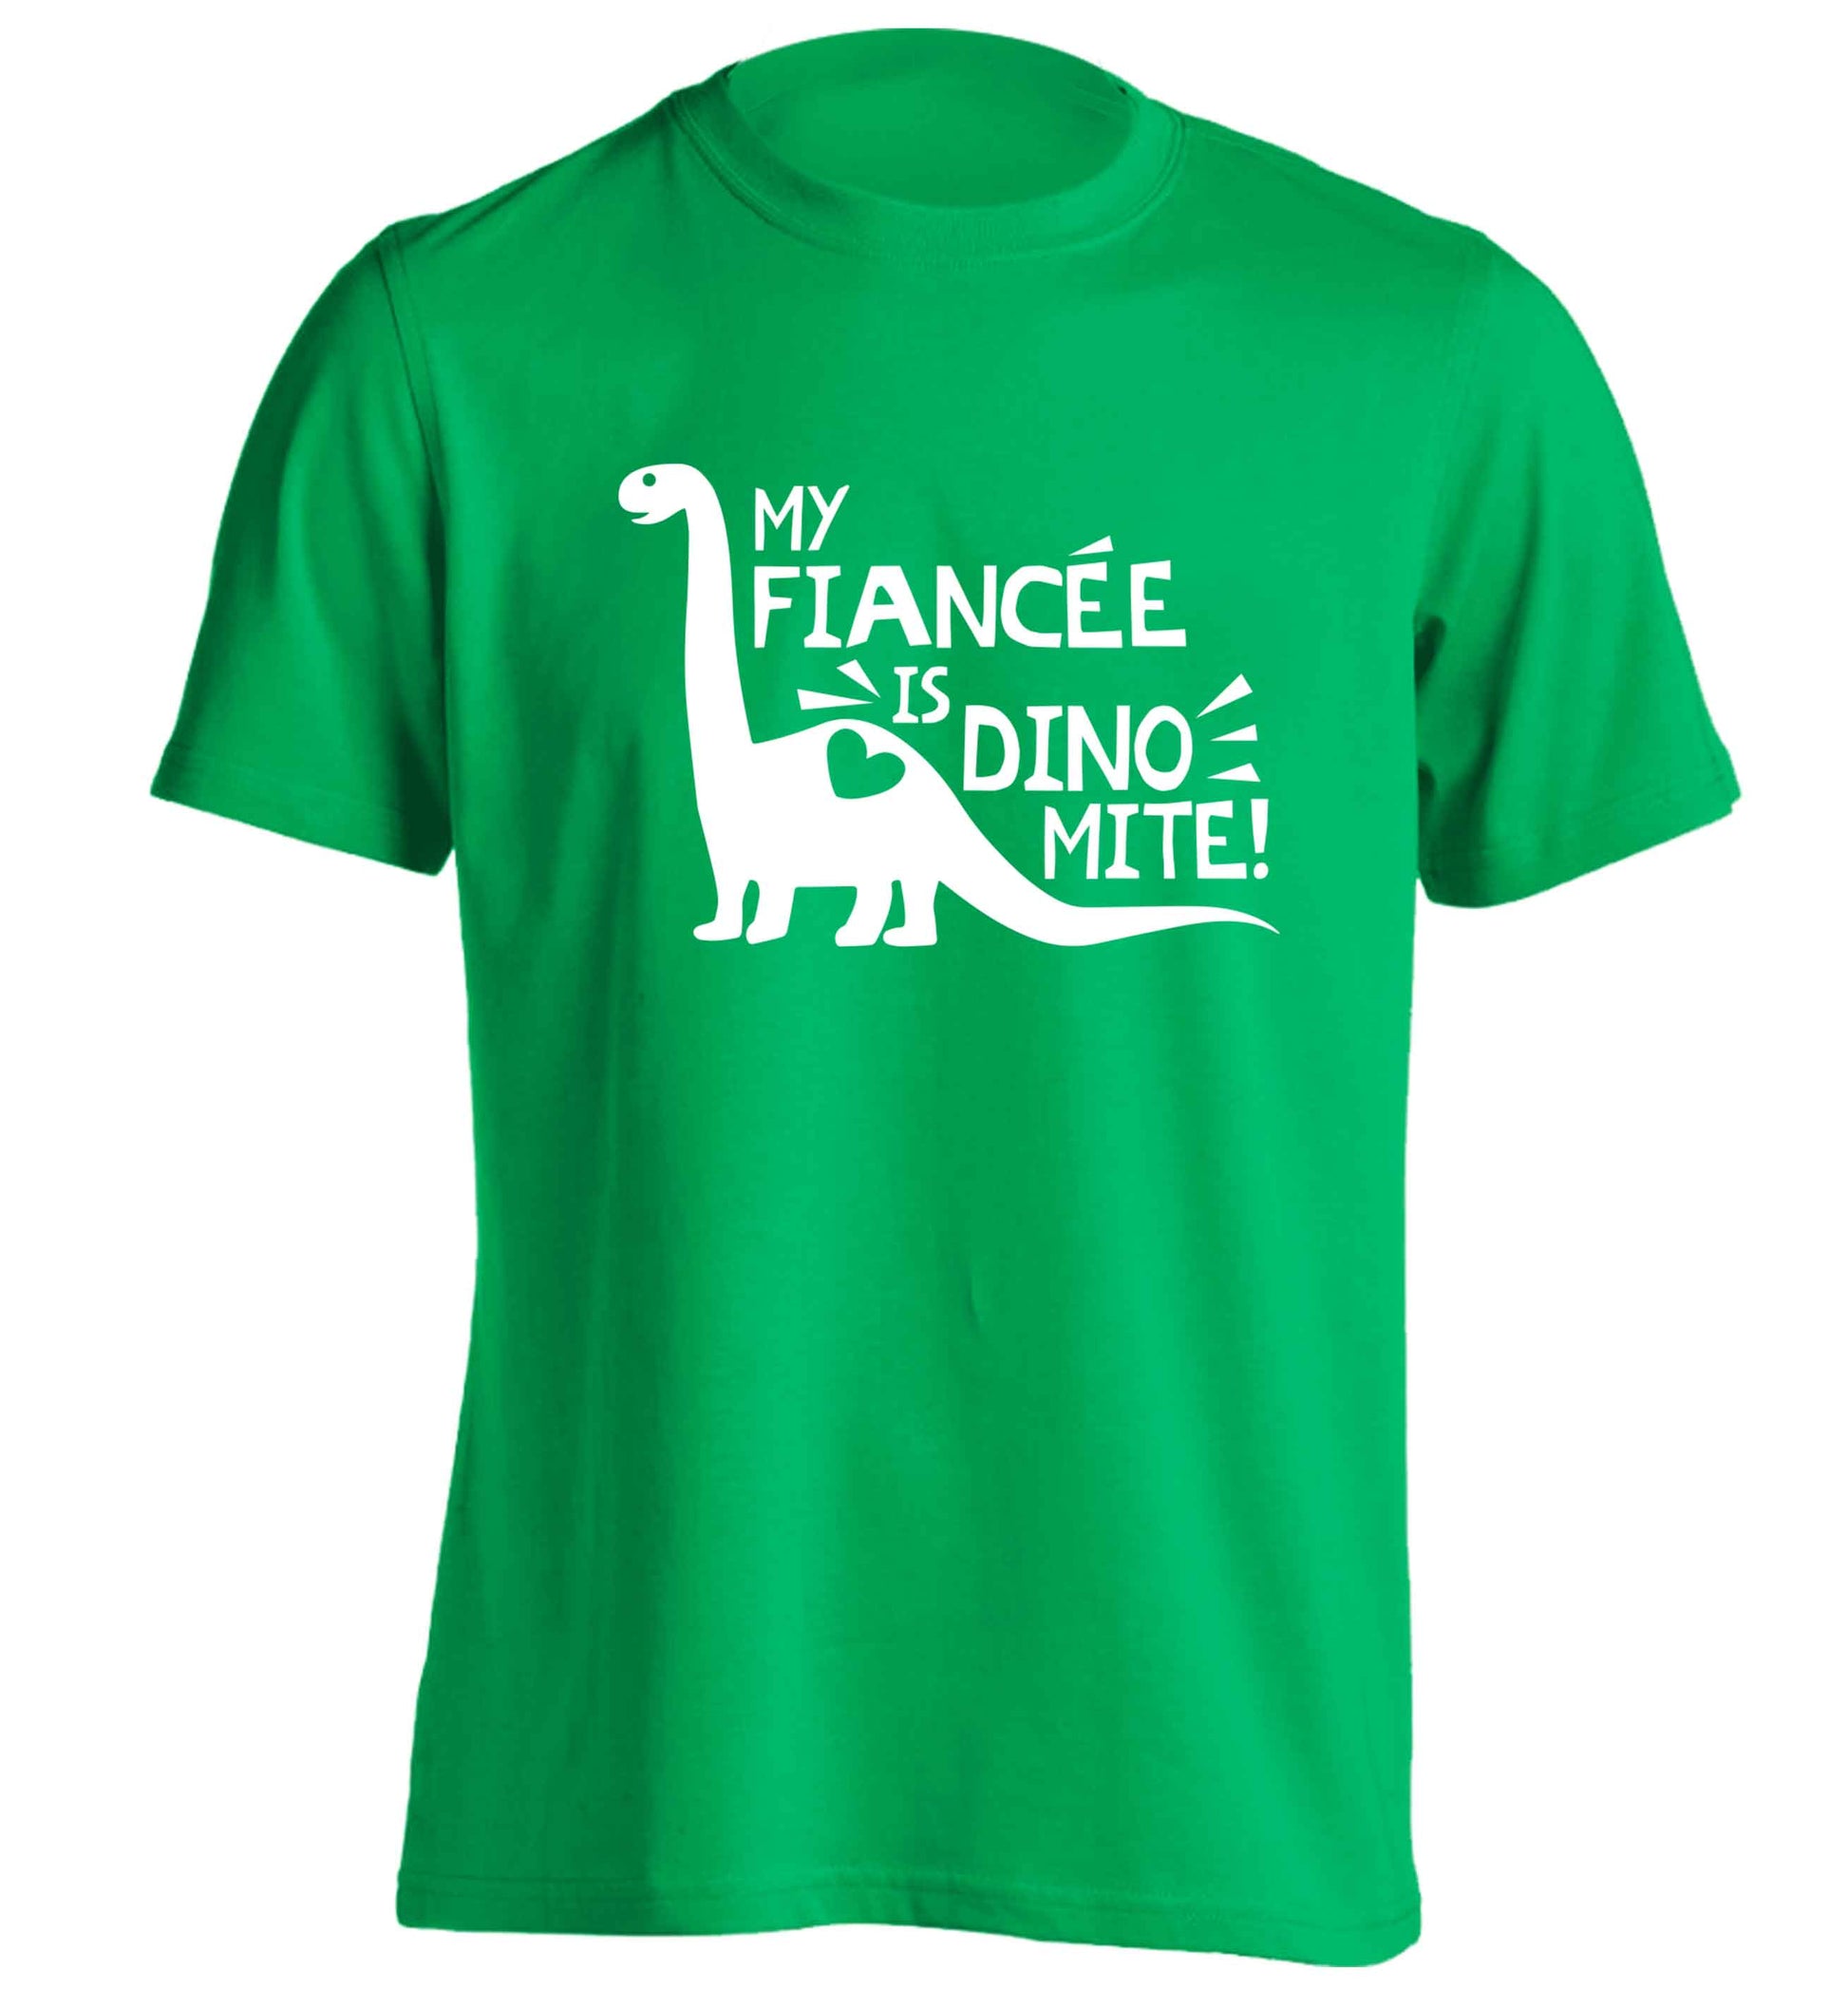 My fiancee is dinomite! adults unisex green Tshirt 2XL